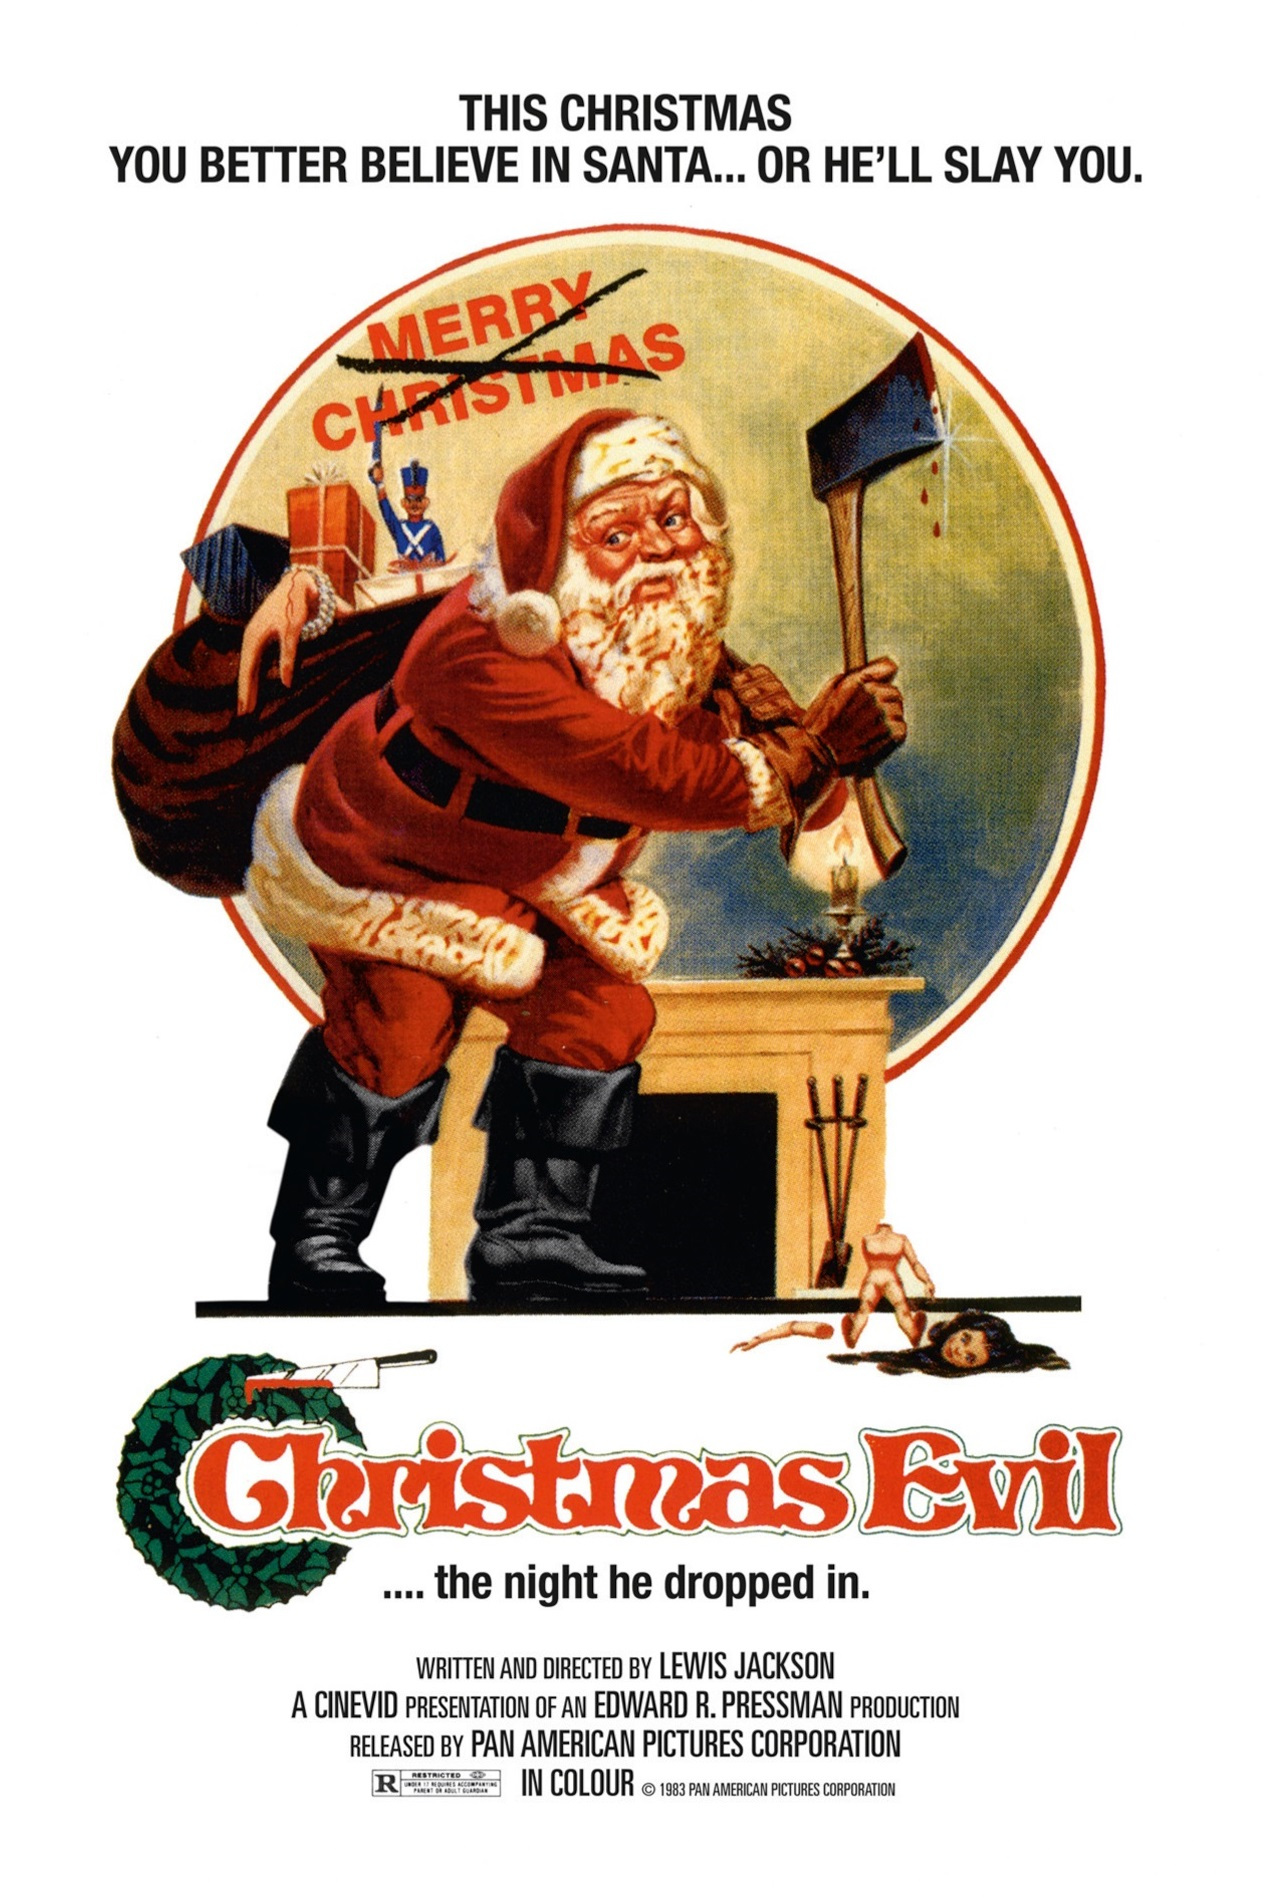 Stiahni si Filmy CZ/SK dabing Vanocni zlo / Christmas Evil (1980)(CZ)[1080p] = CSFD 33%